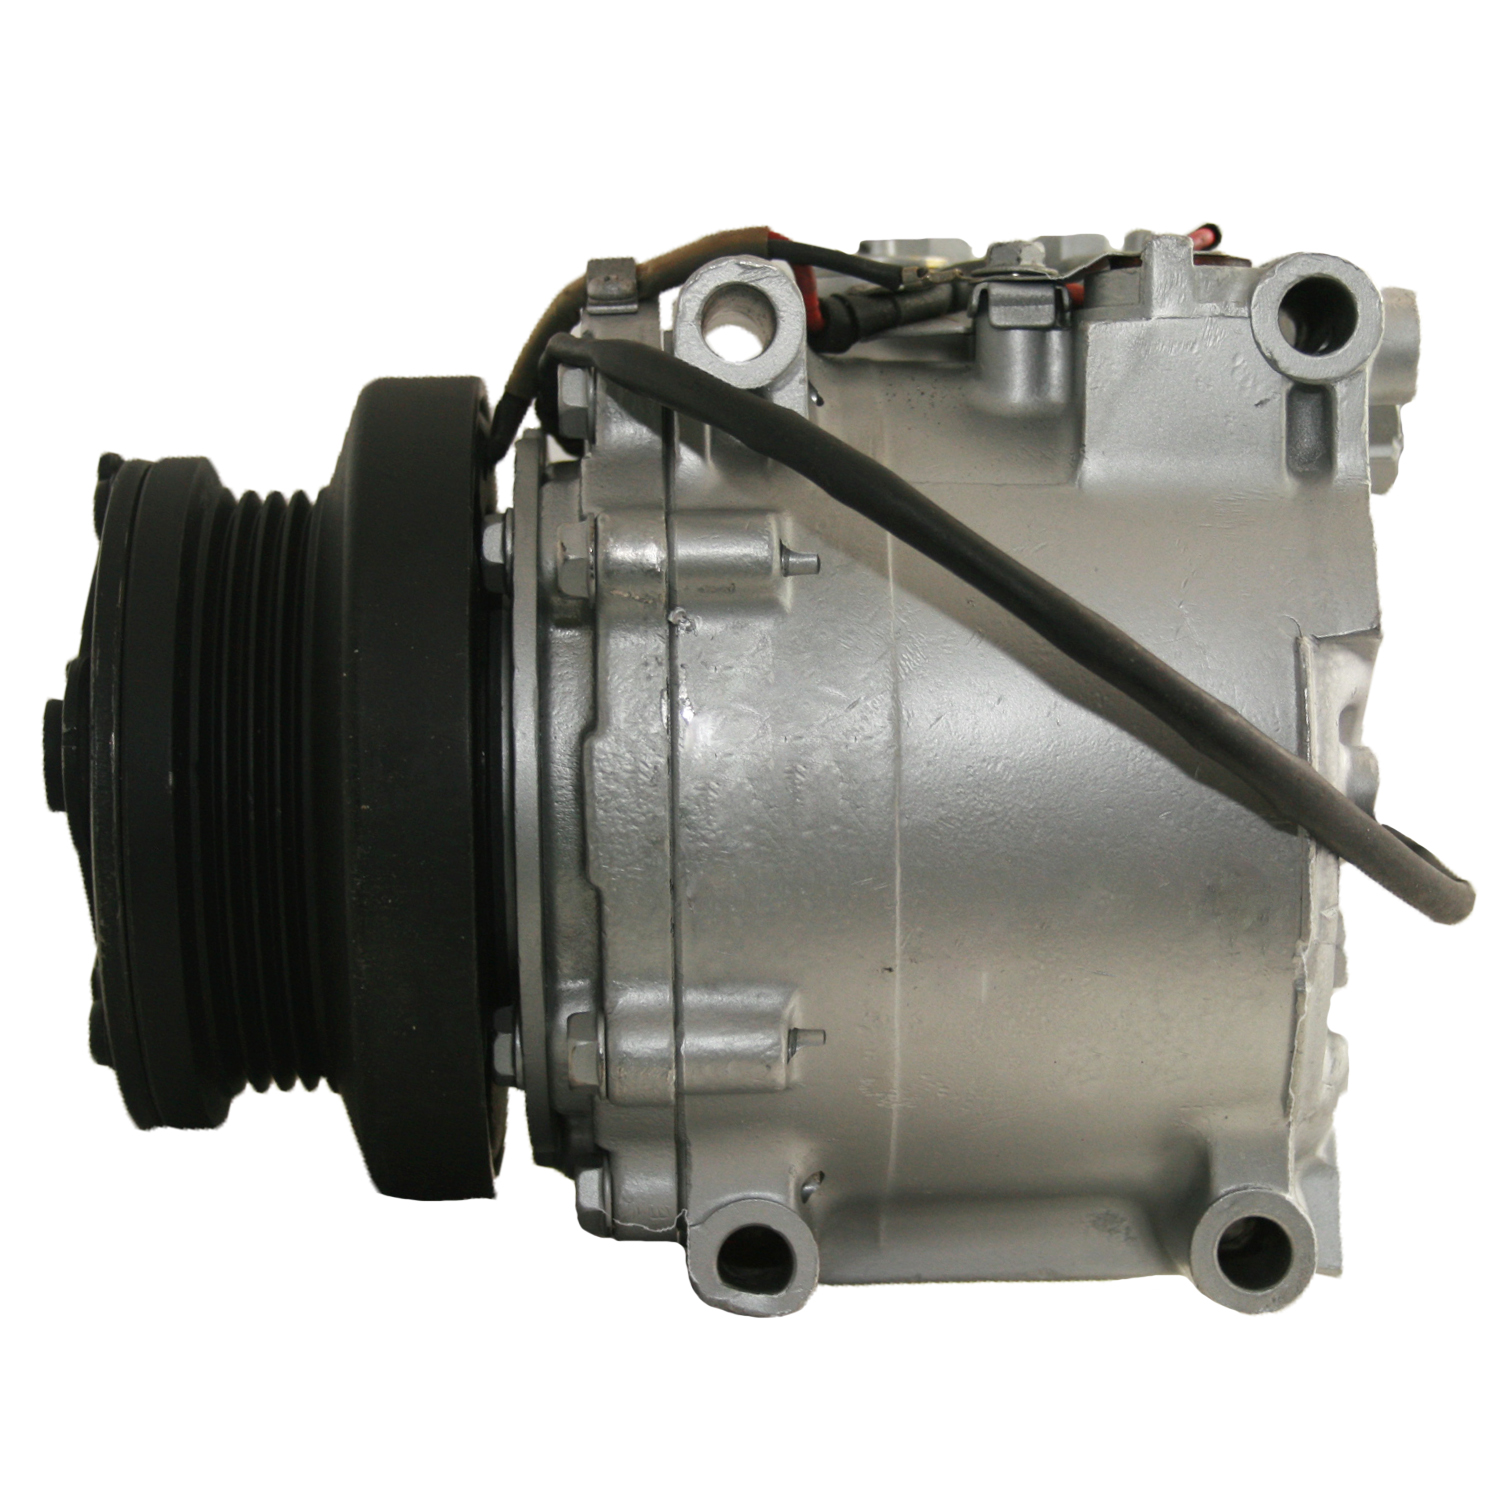 TCW Compressor 40801.401 Remanufactured Product Image field_60b6a13a6e67c